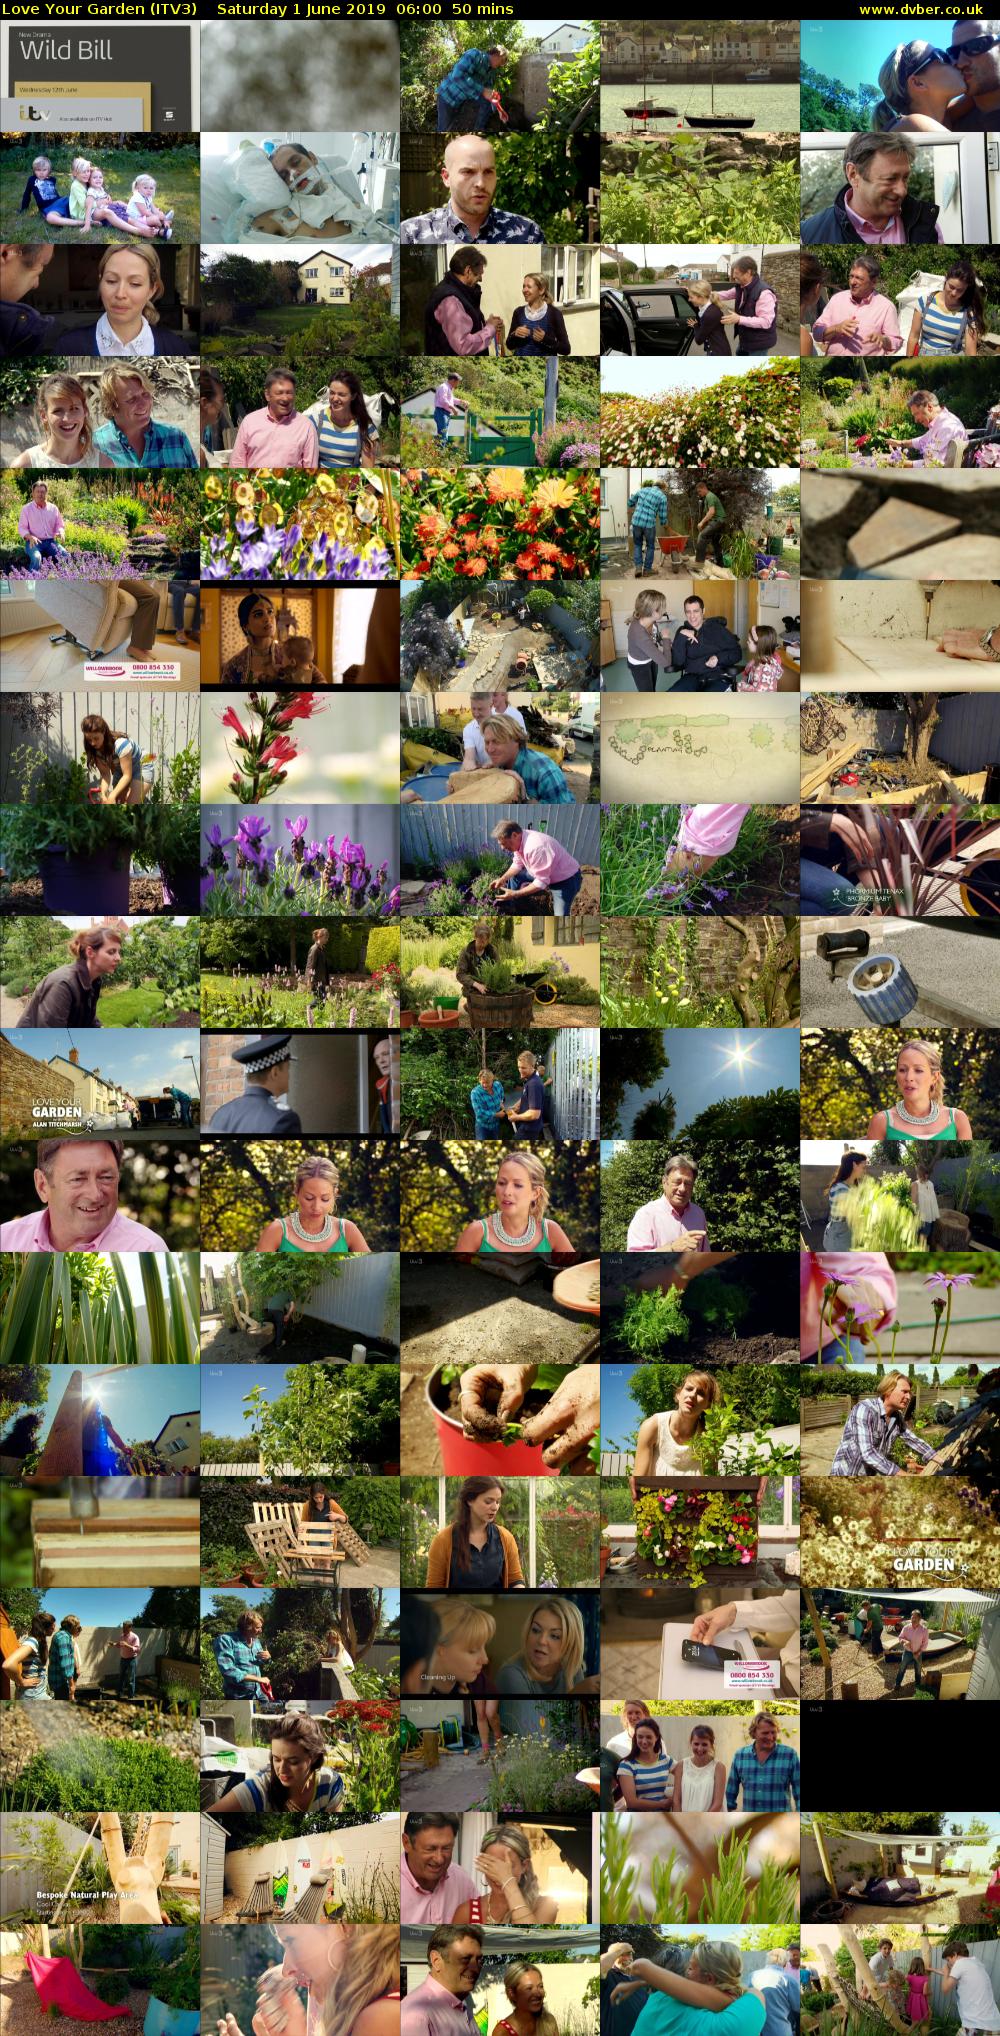 Love Your Garden (ITV3) Saturday 1 June 2019 06:00 - 06:50